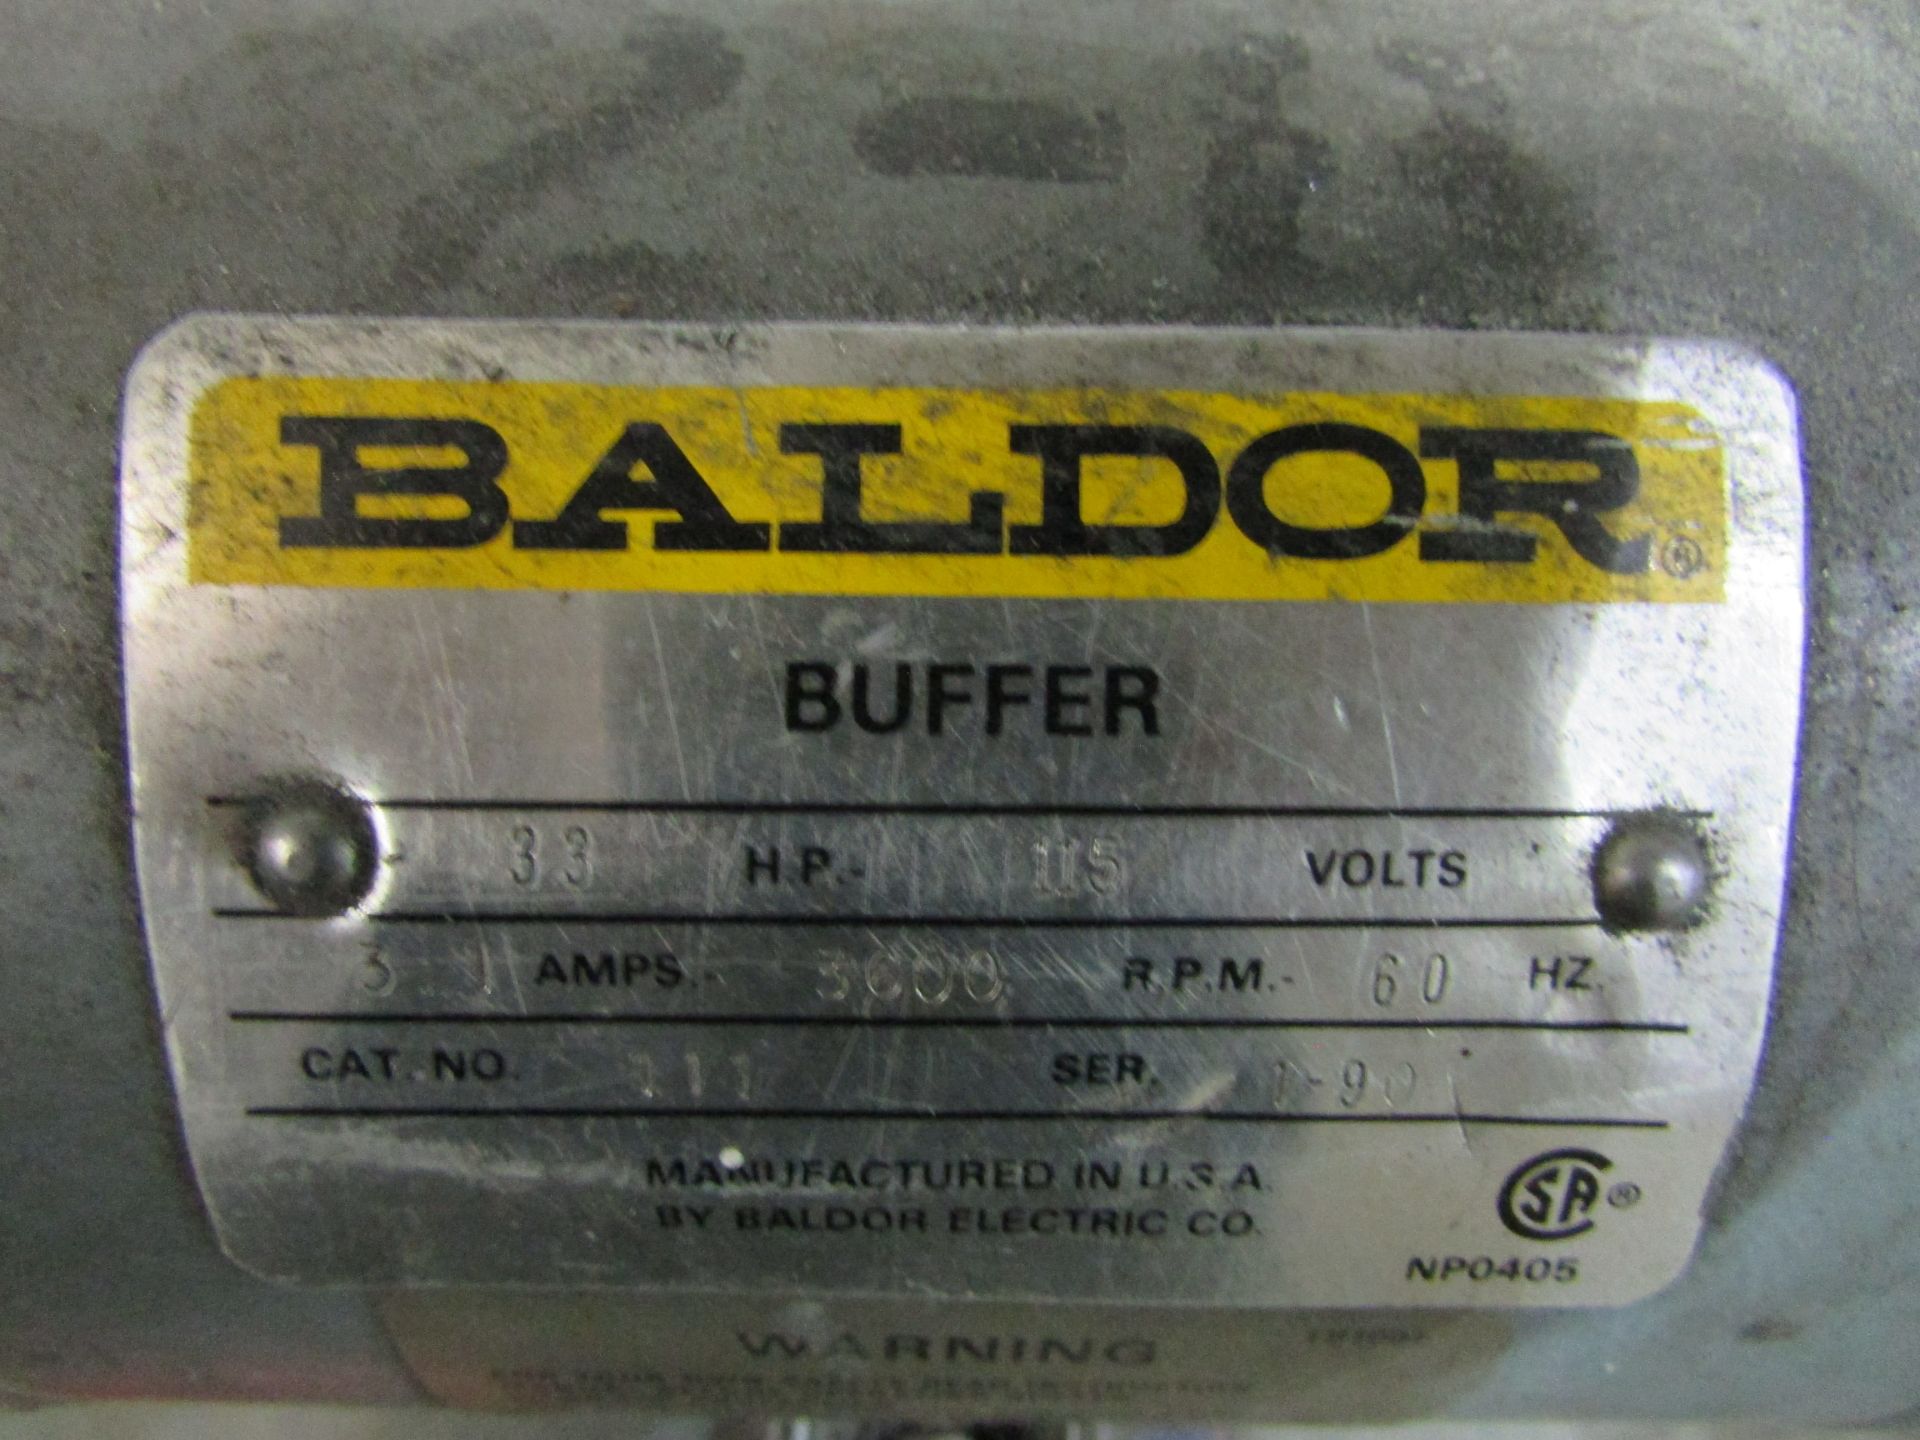 6" Baldor 111 Double End Pedestal Buffer - Image 4 of 4